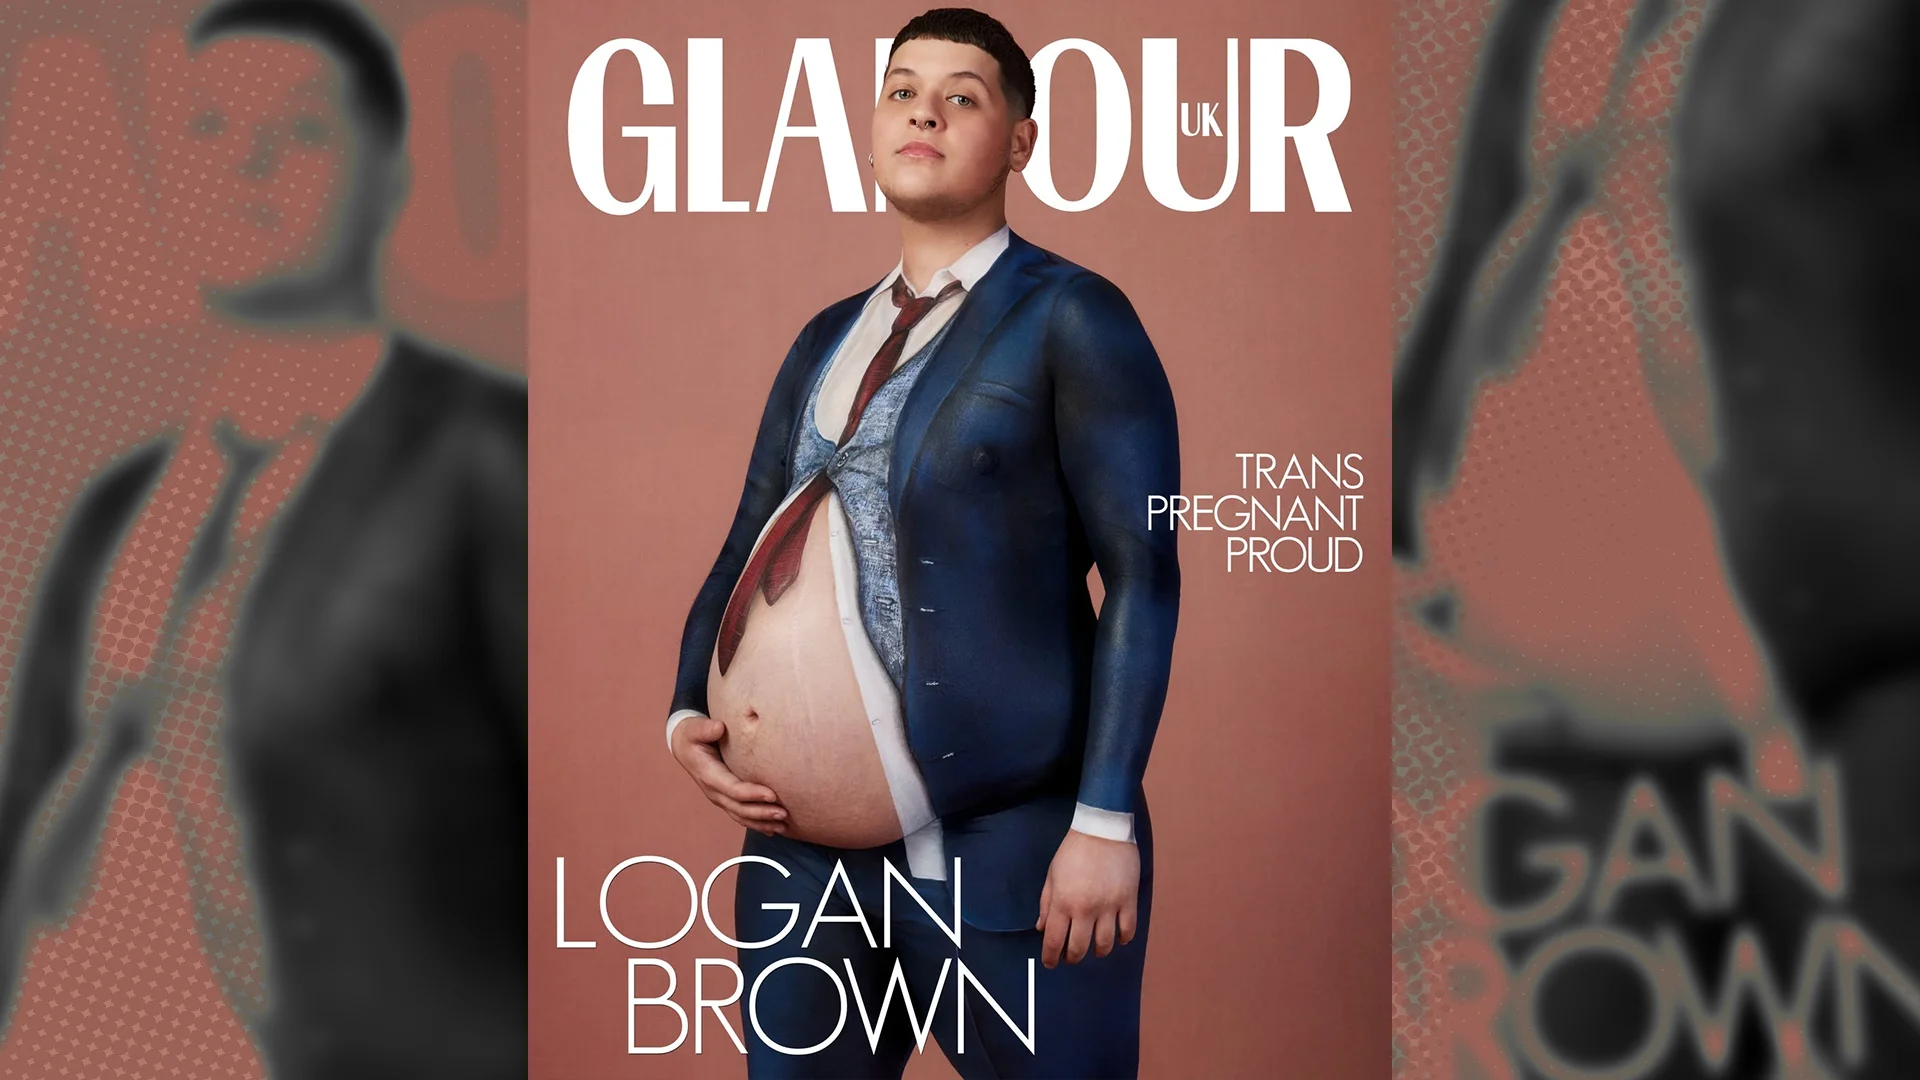 Pregnant transgender man graces cover of Glamour UK